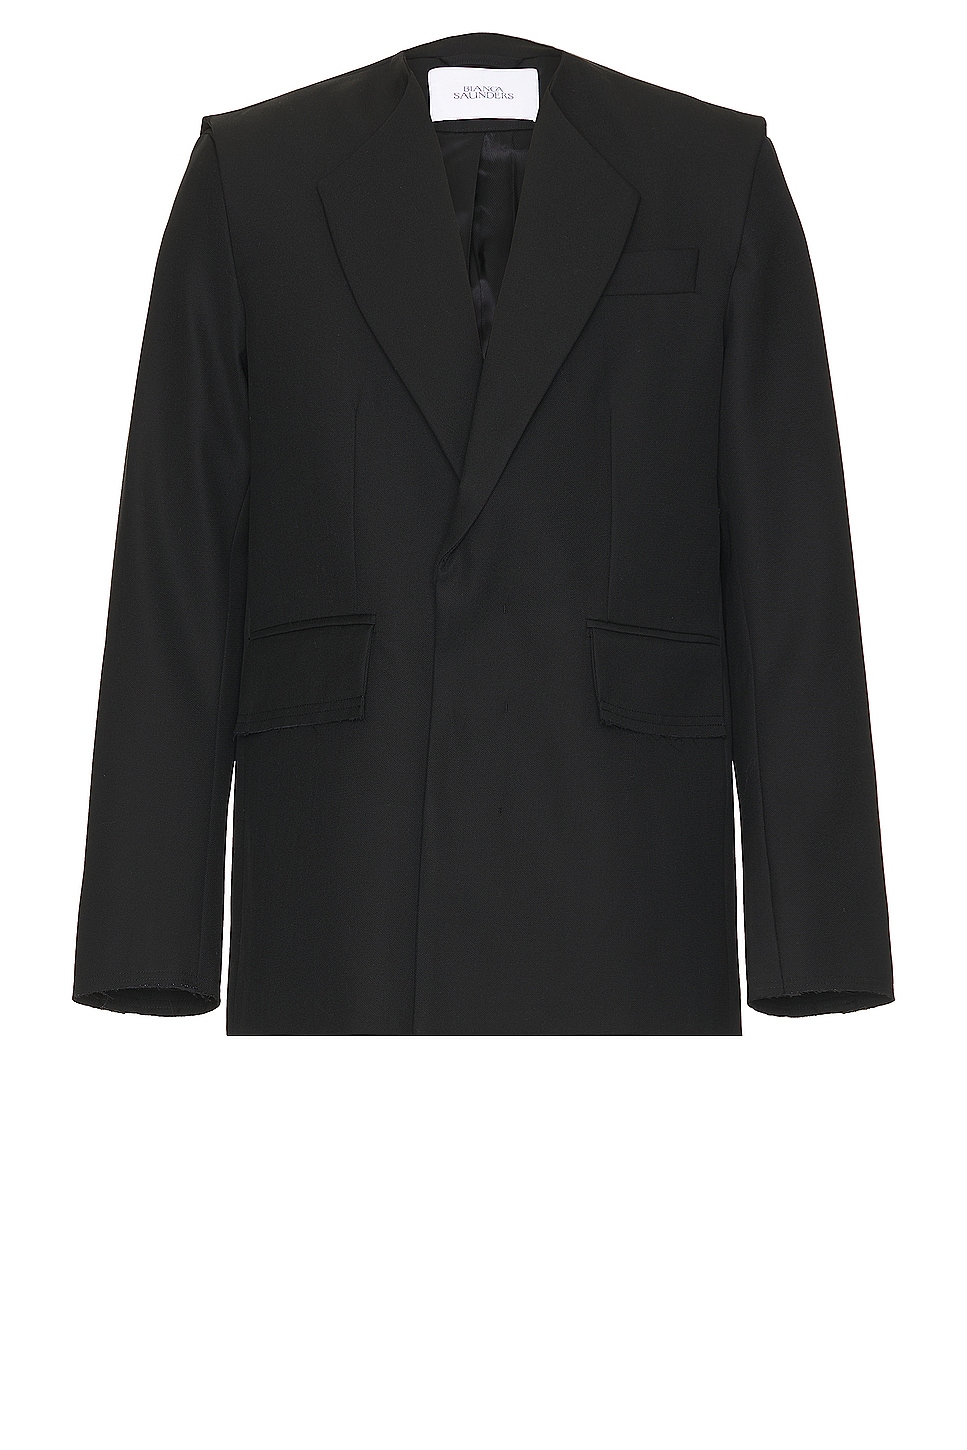 Image 1 of Bianca Saunders Slimaz Jacket in Black